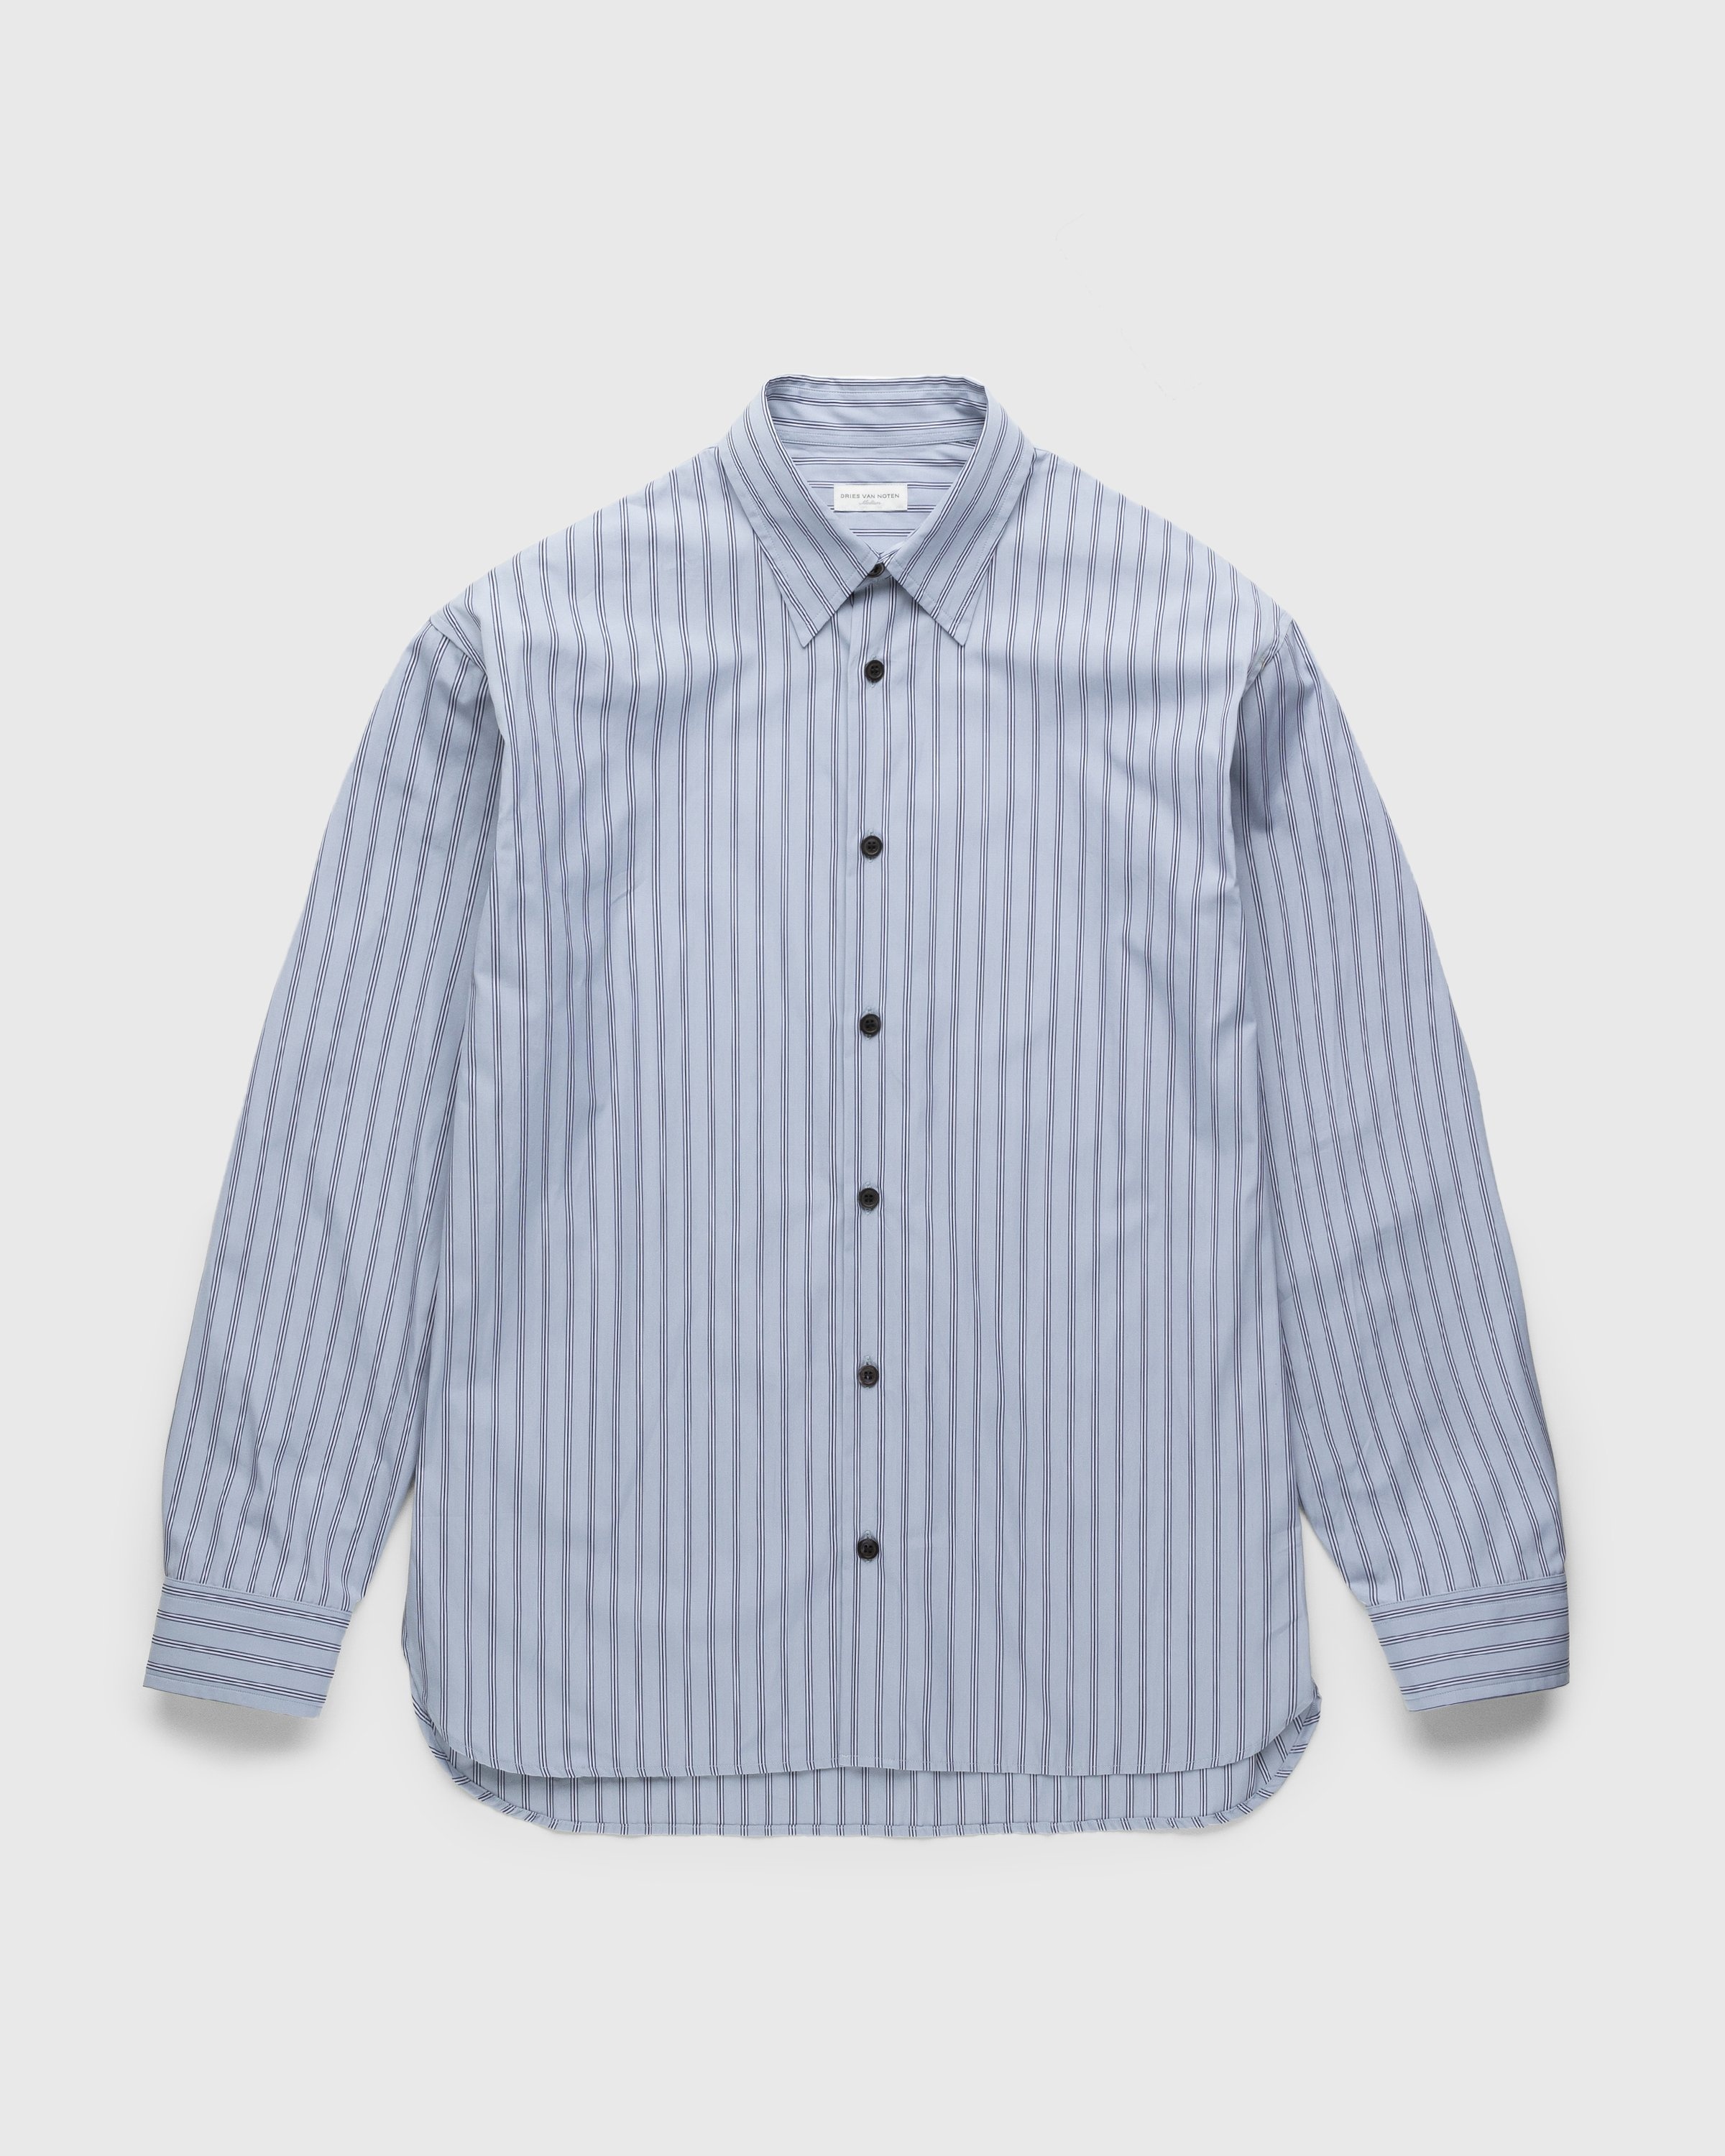 Dries van Noten – Croom Shirt Blue - Longsleeve Shirts - Blue - Image 1